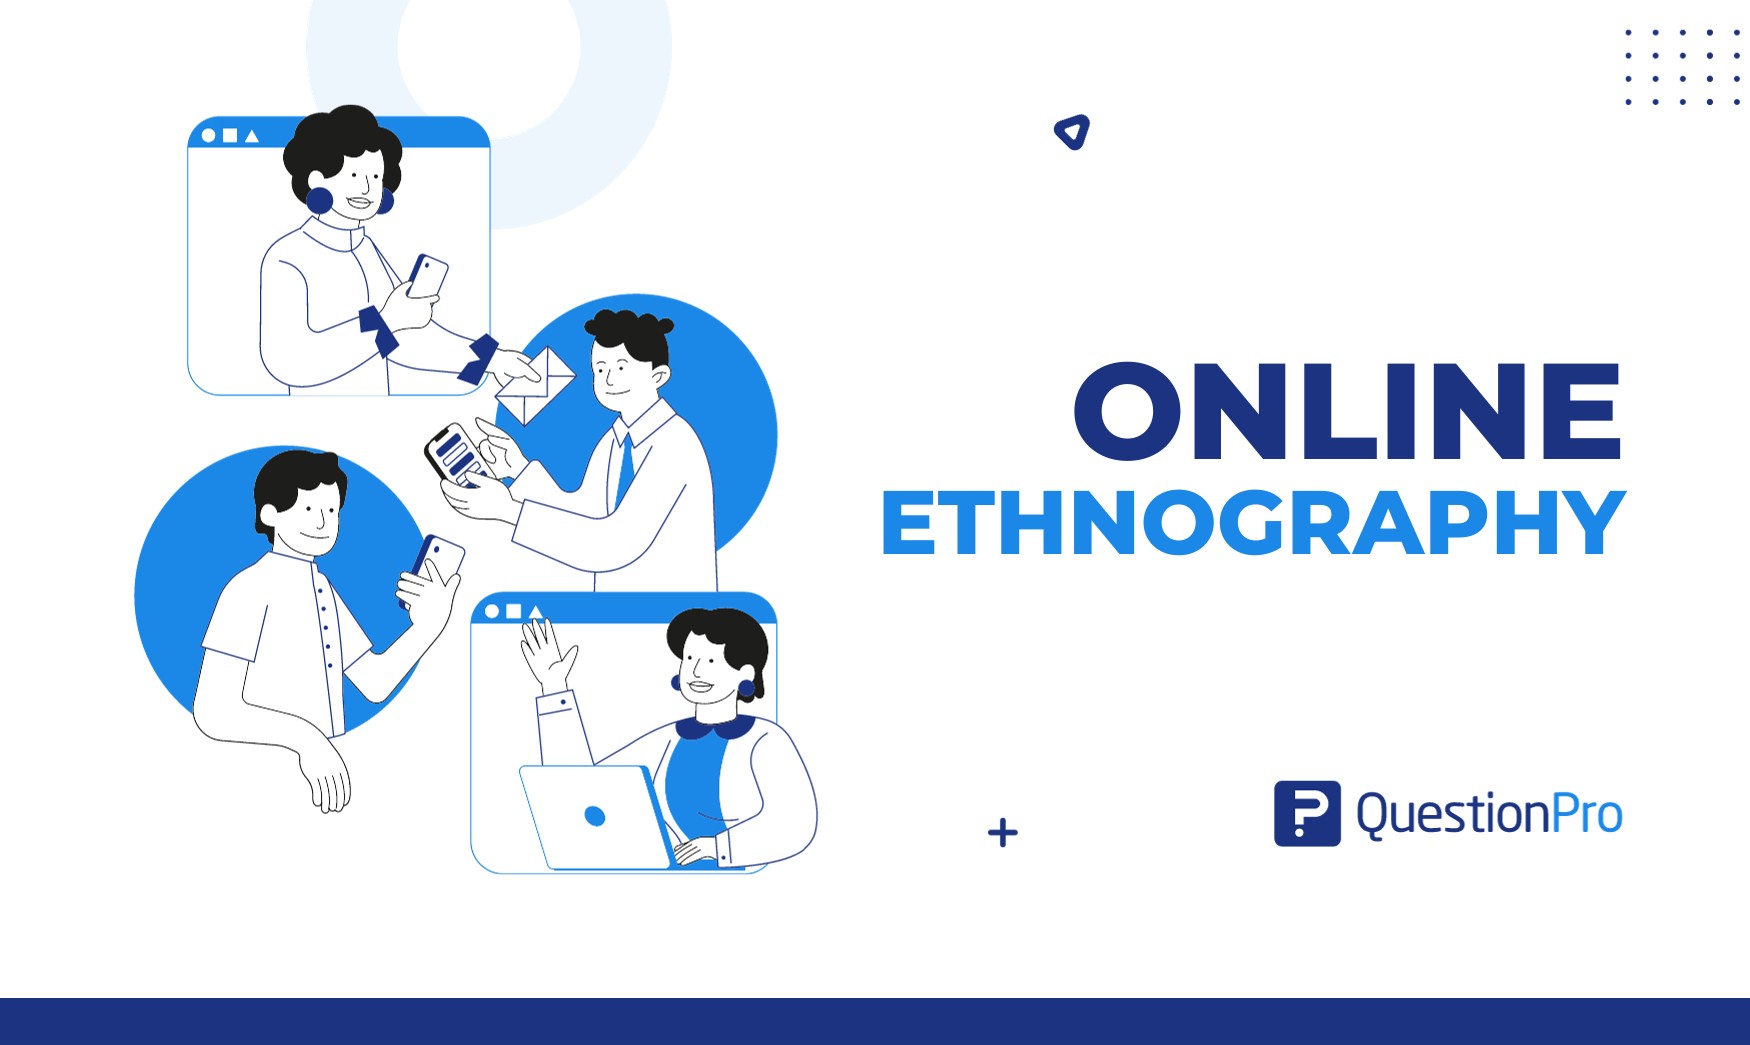 Online ethnography